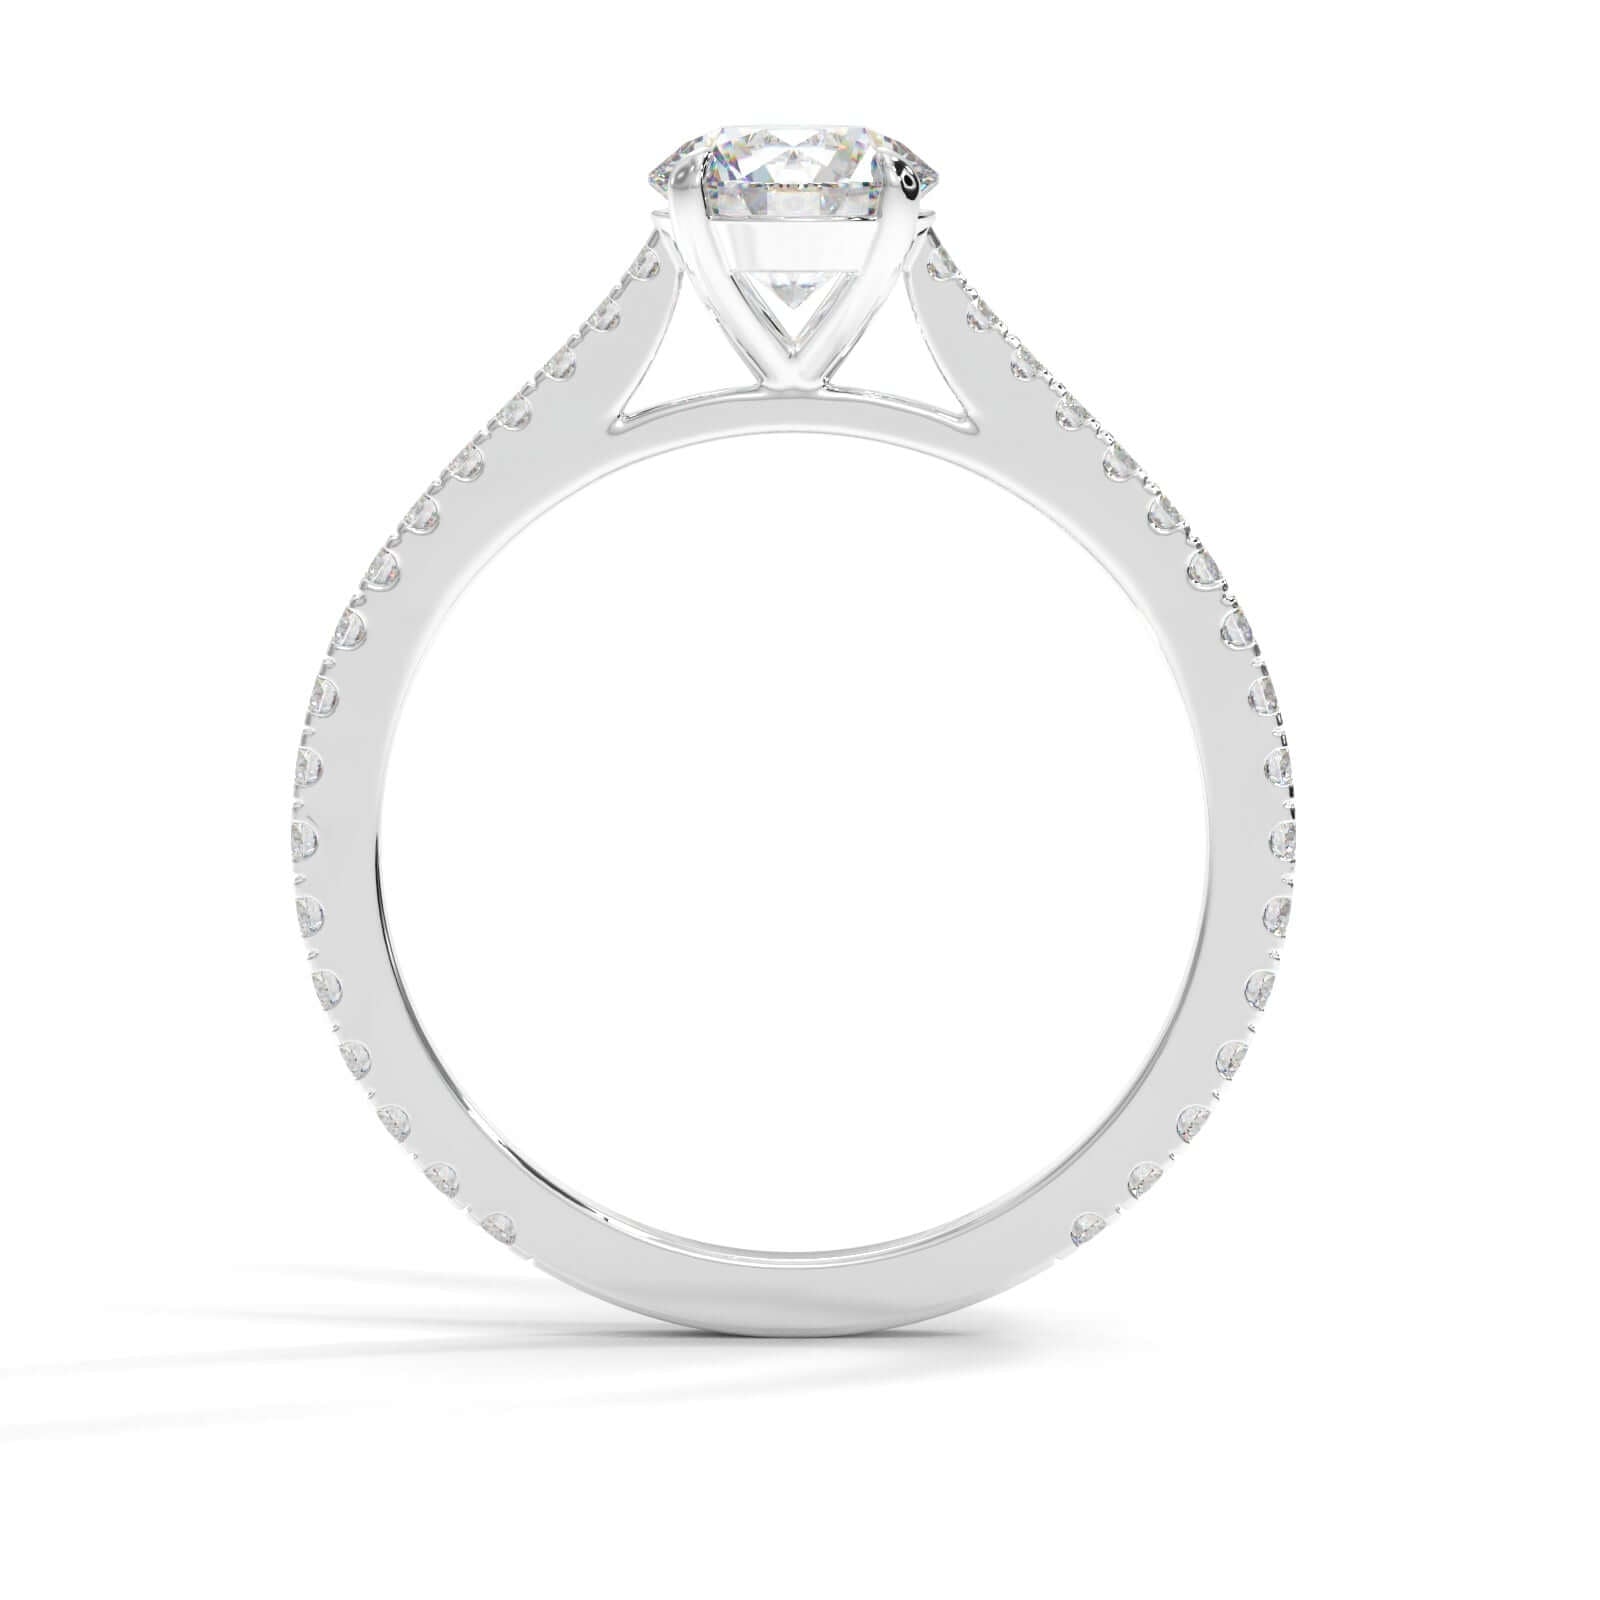 Round brilliant Diamond Engagement Ring Gold